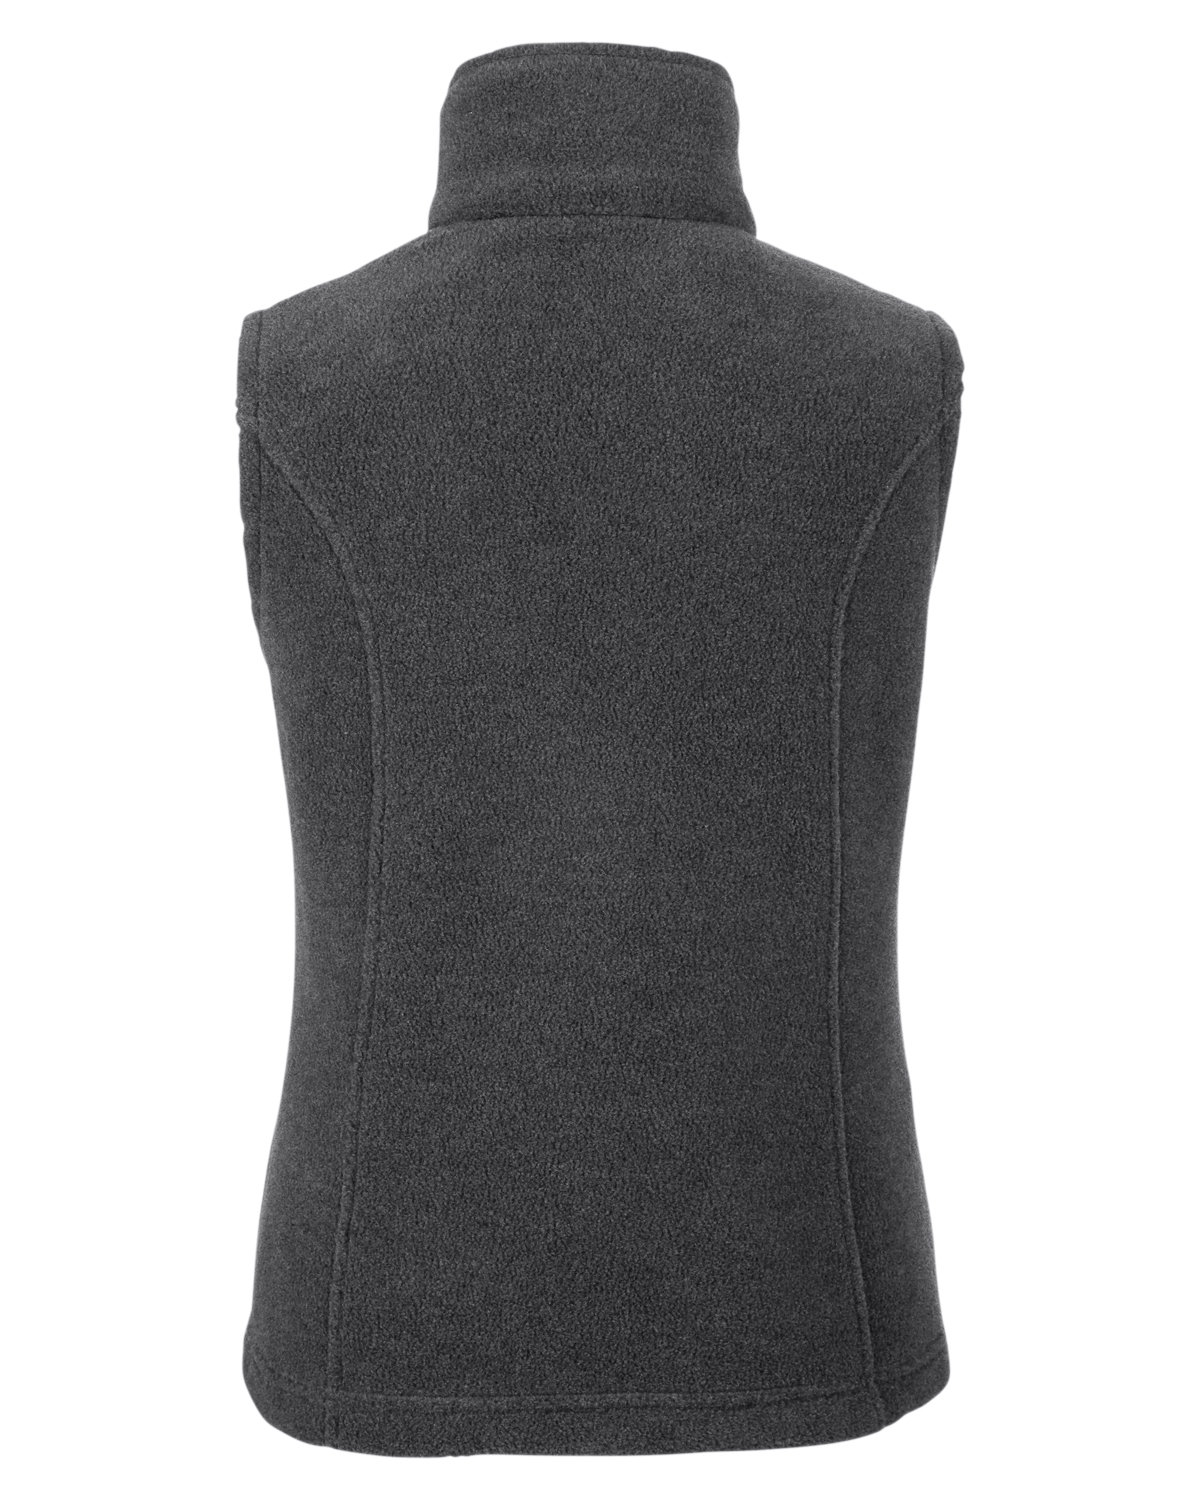 Women’s Benton Springs™ Fleece Vest - Plus Size